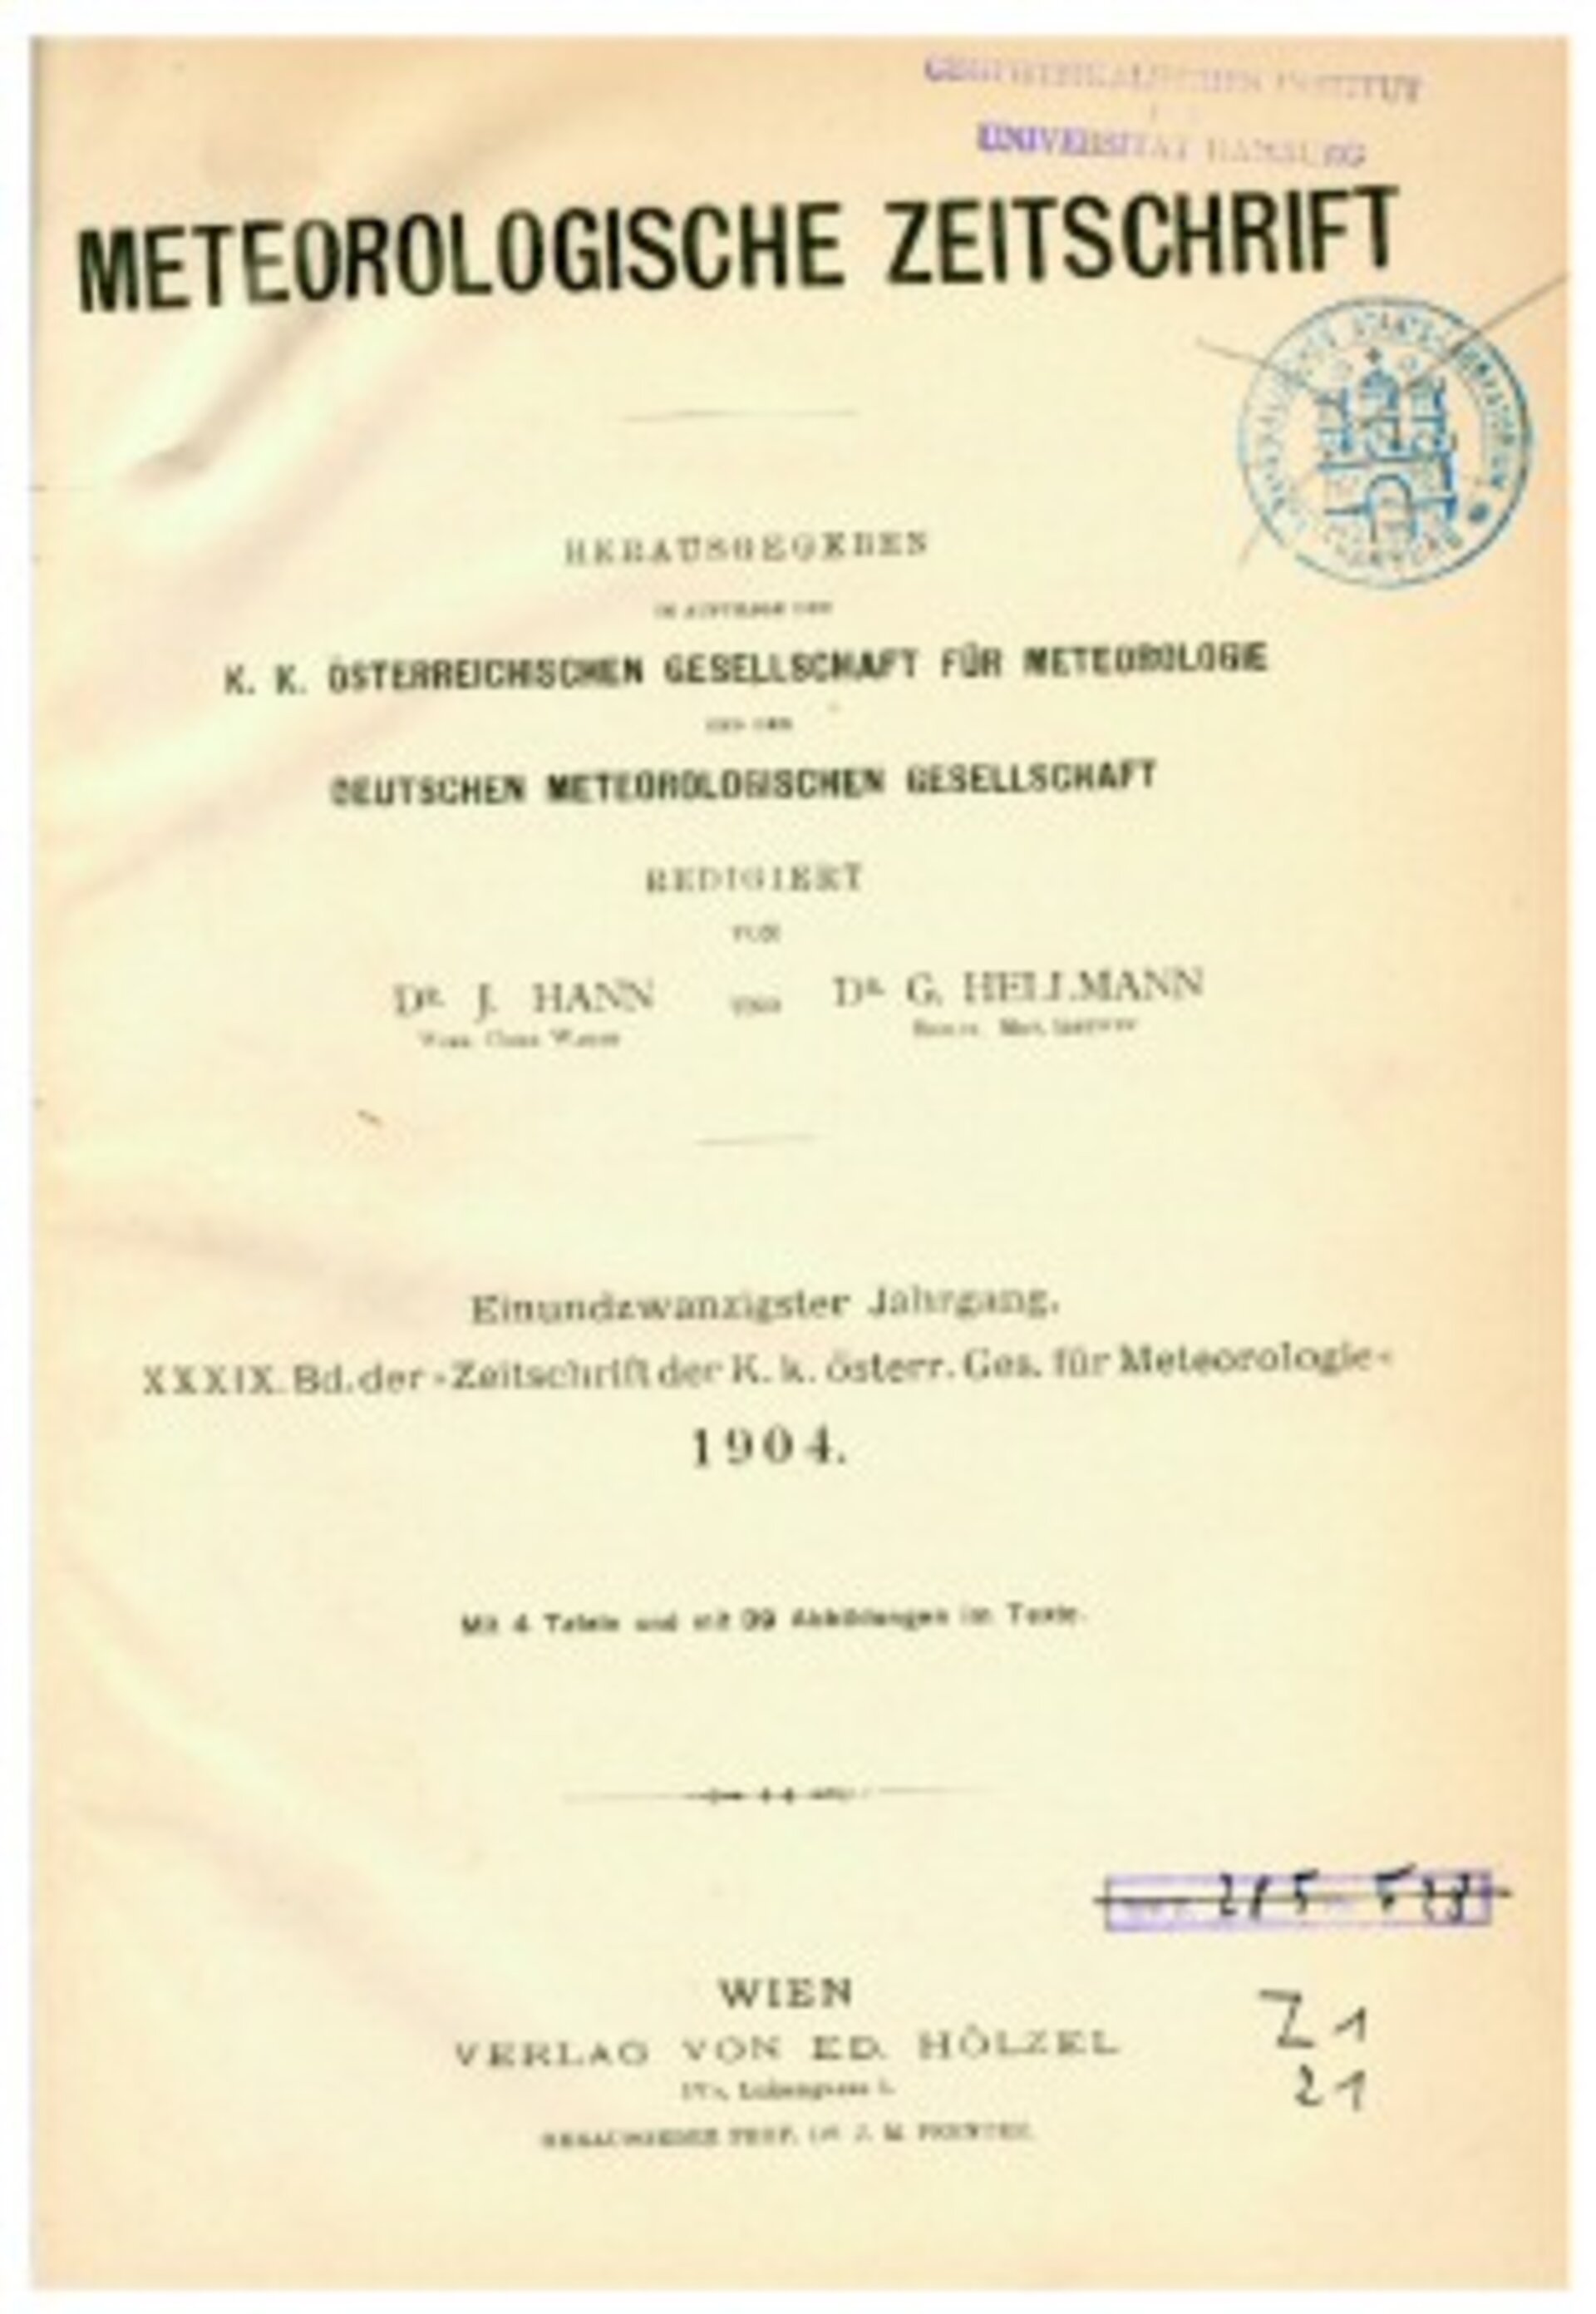 The Bjerknes manuscript (1904)